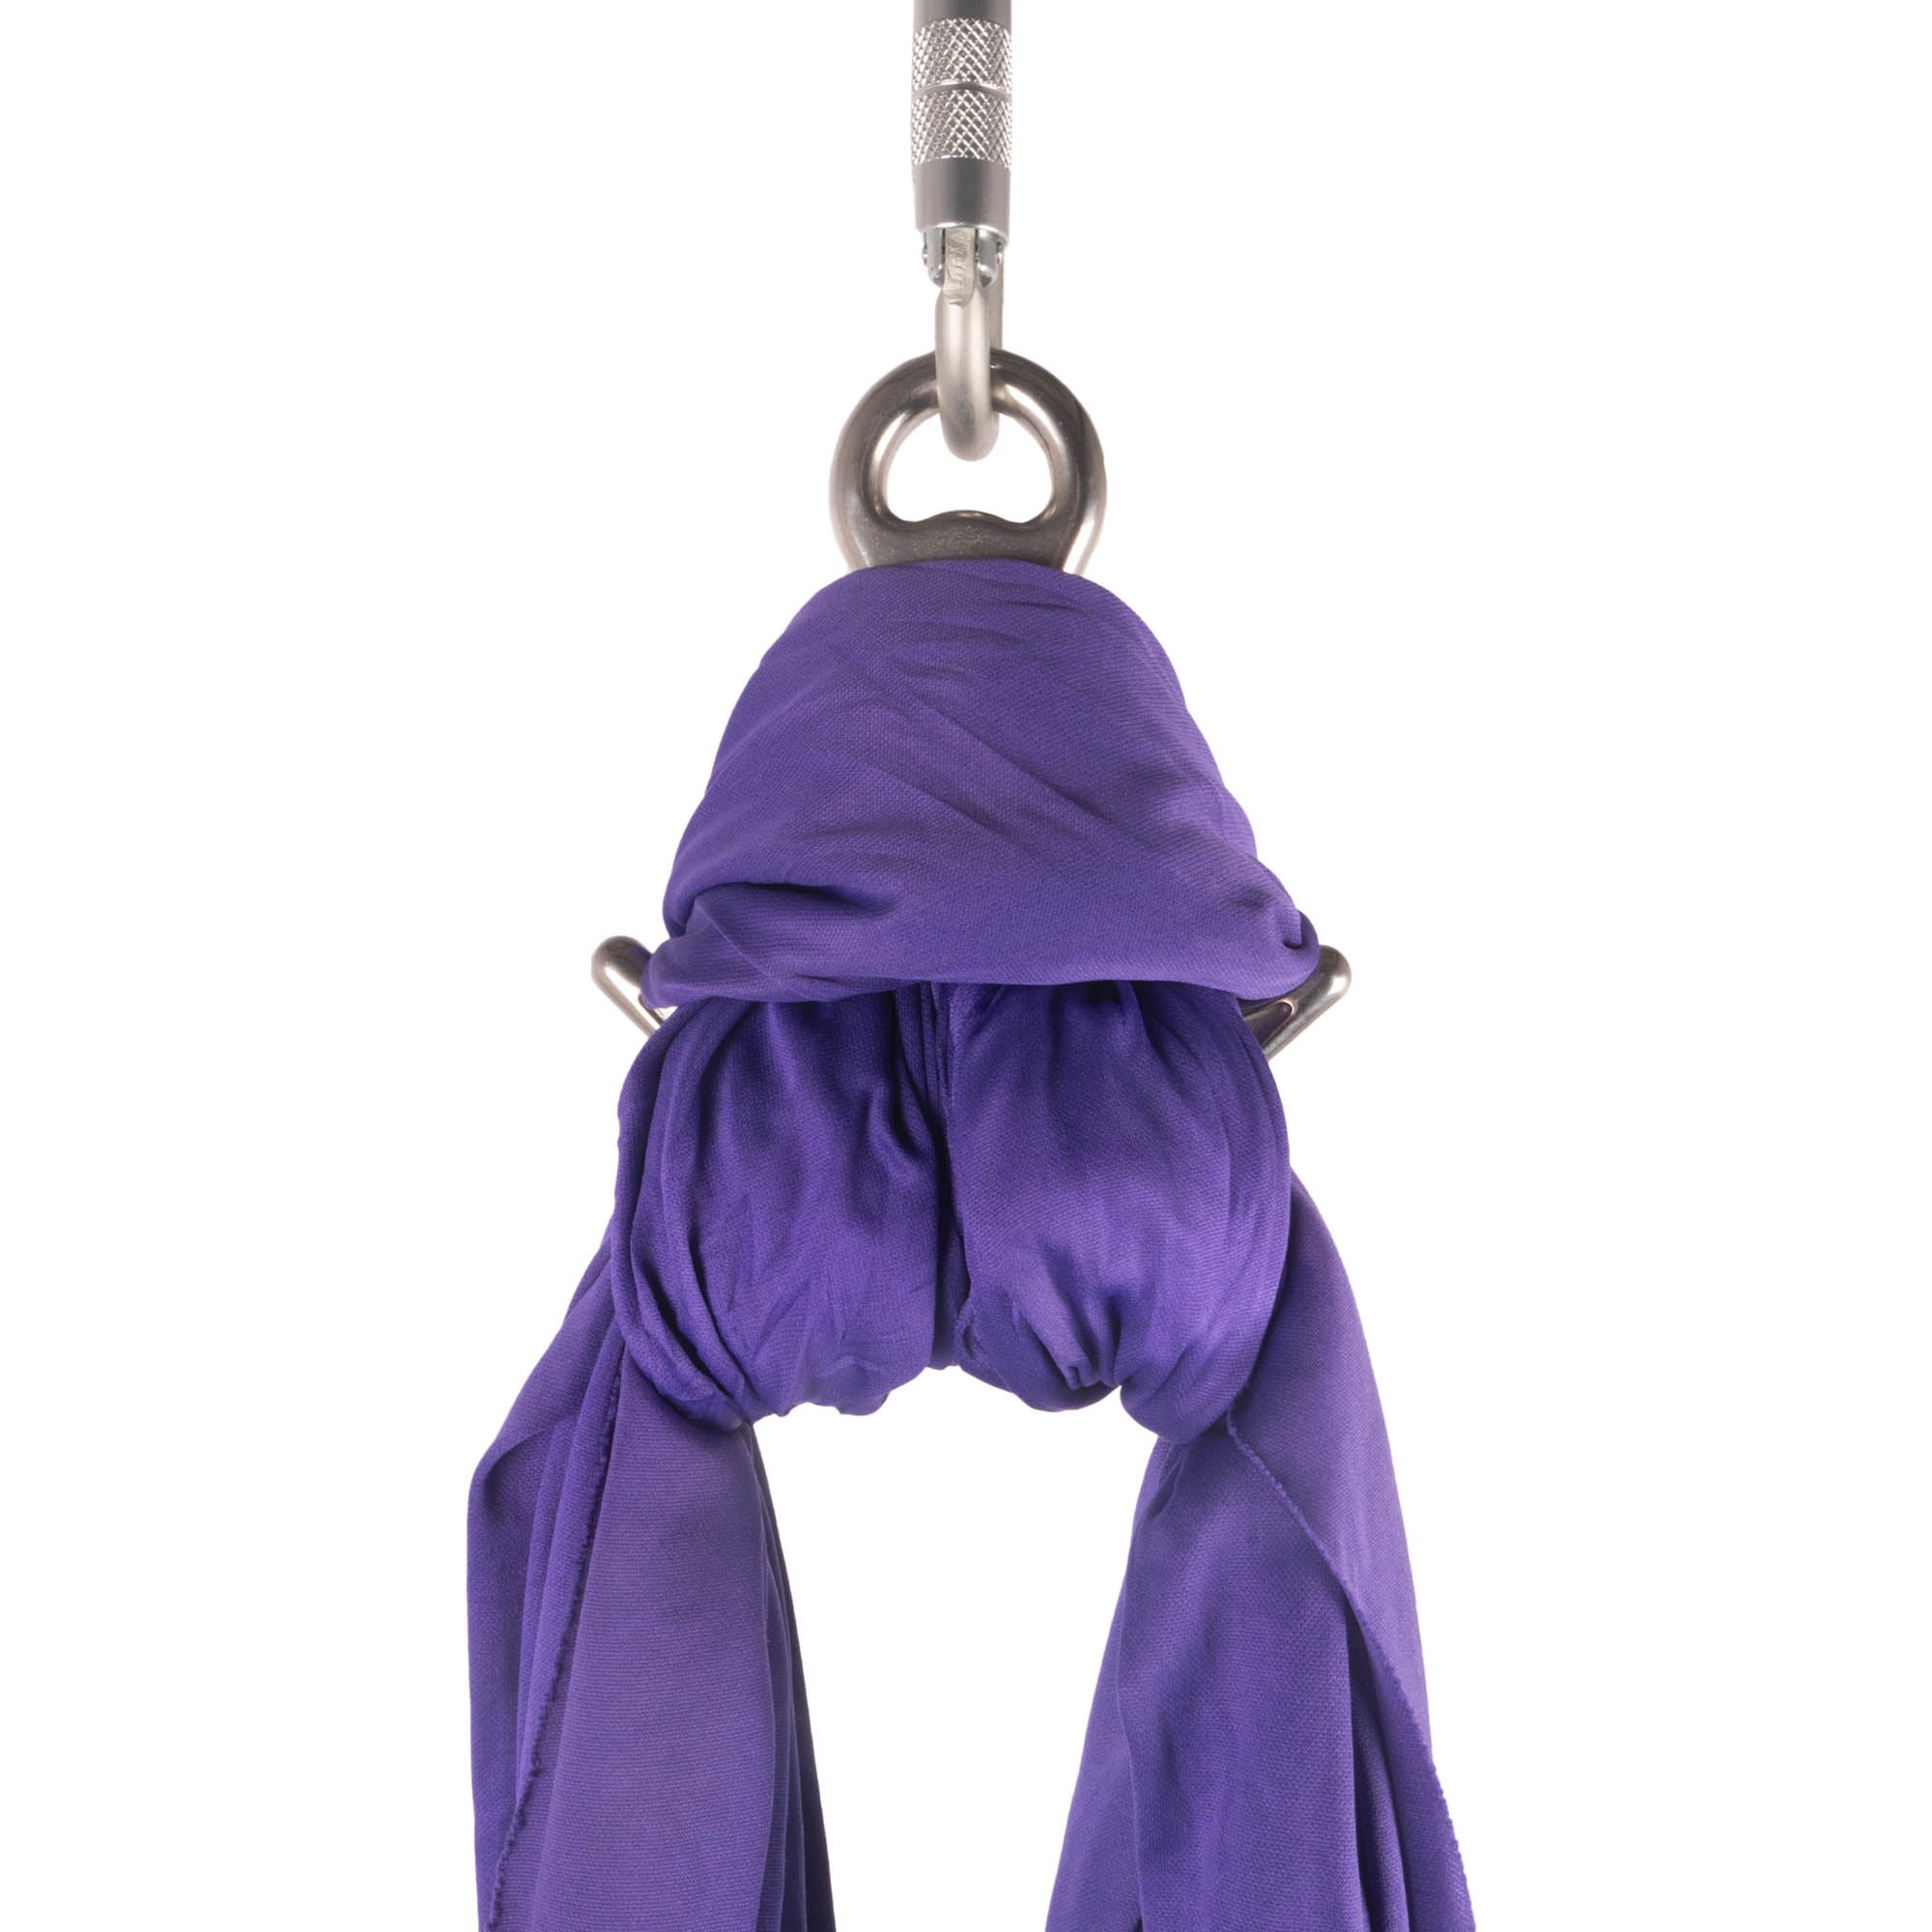 ISC steel figure of 8 rigging a purple silk